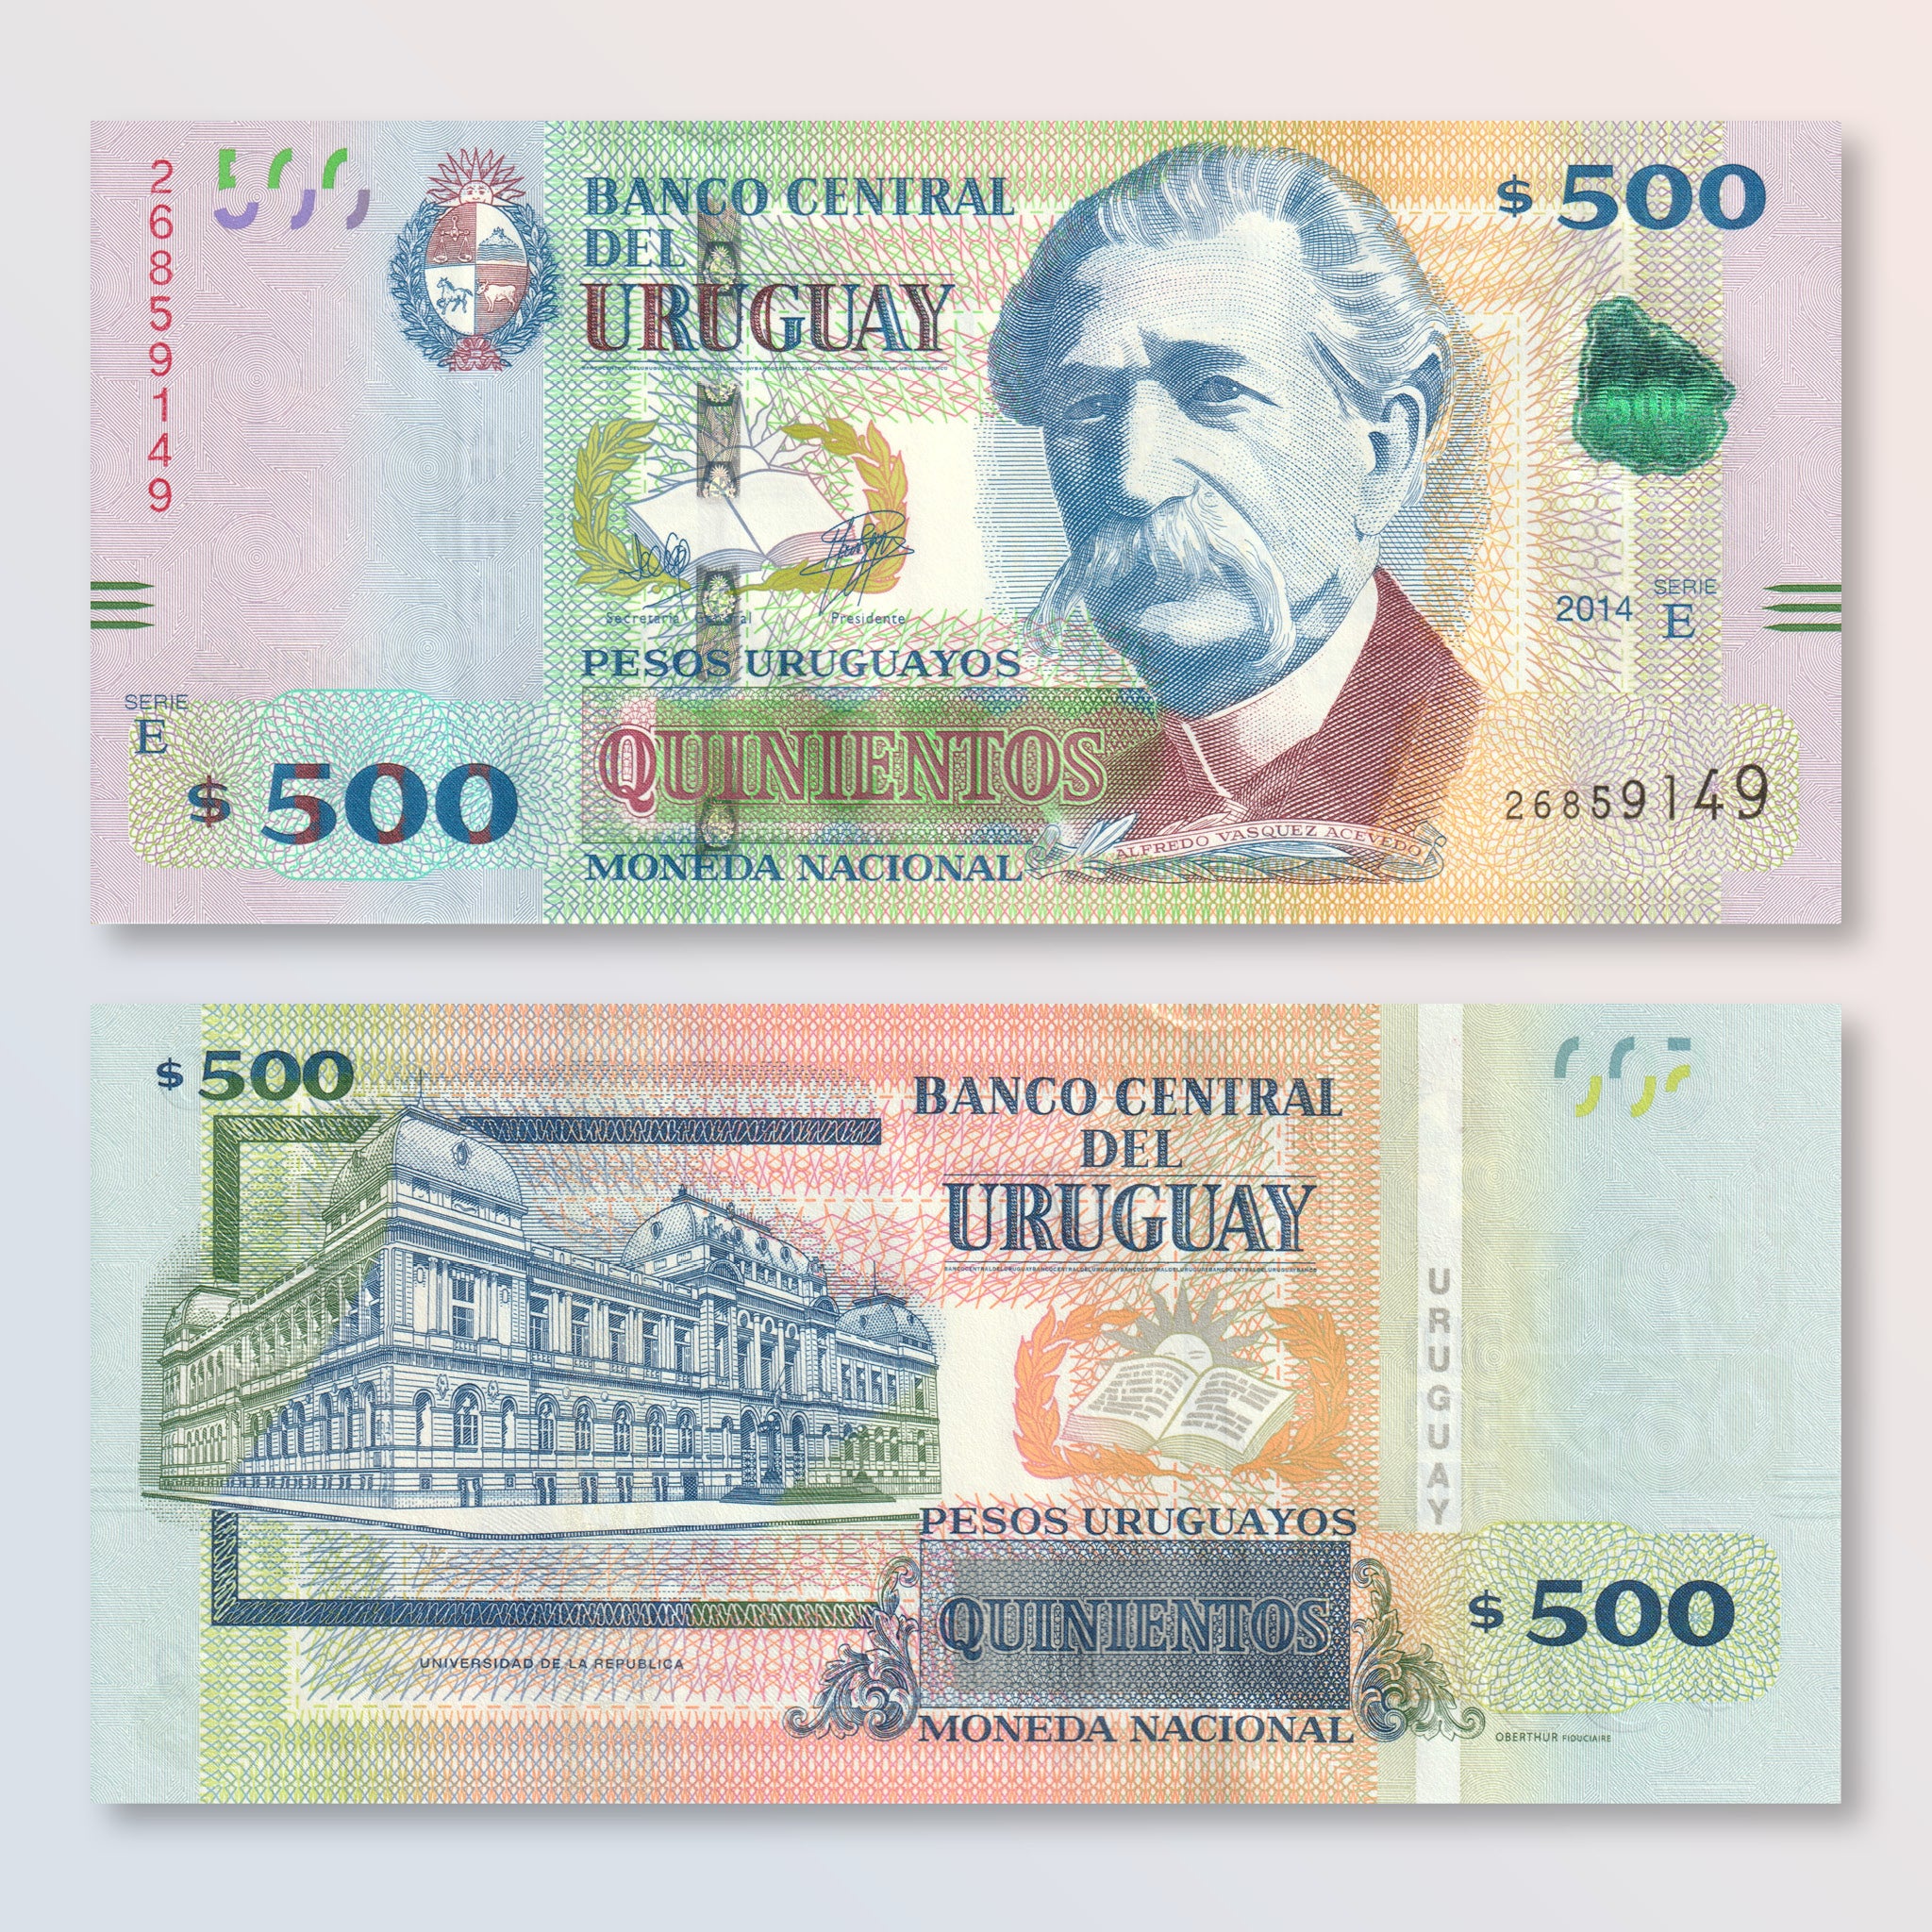 Uruguay 500 Pesos, 2014, B556a, P97, UNC - Robert's World Money - World Banknotes